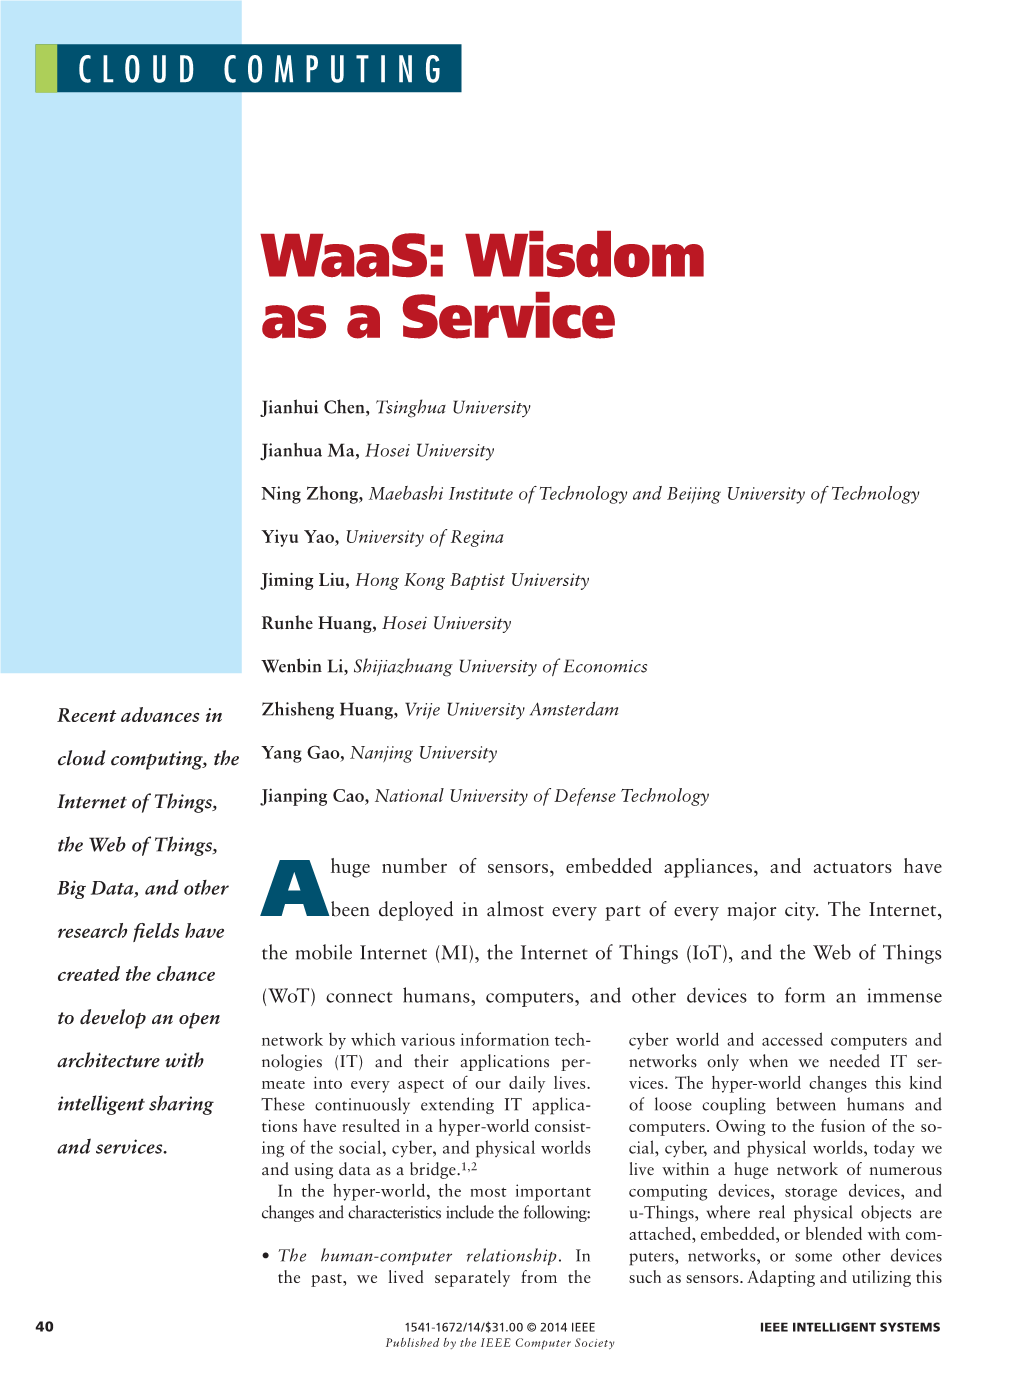 Waas: Wisdom As a Service